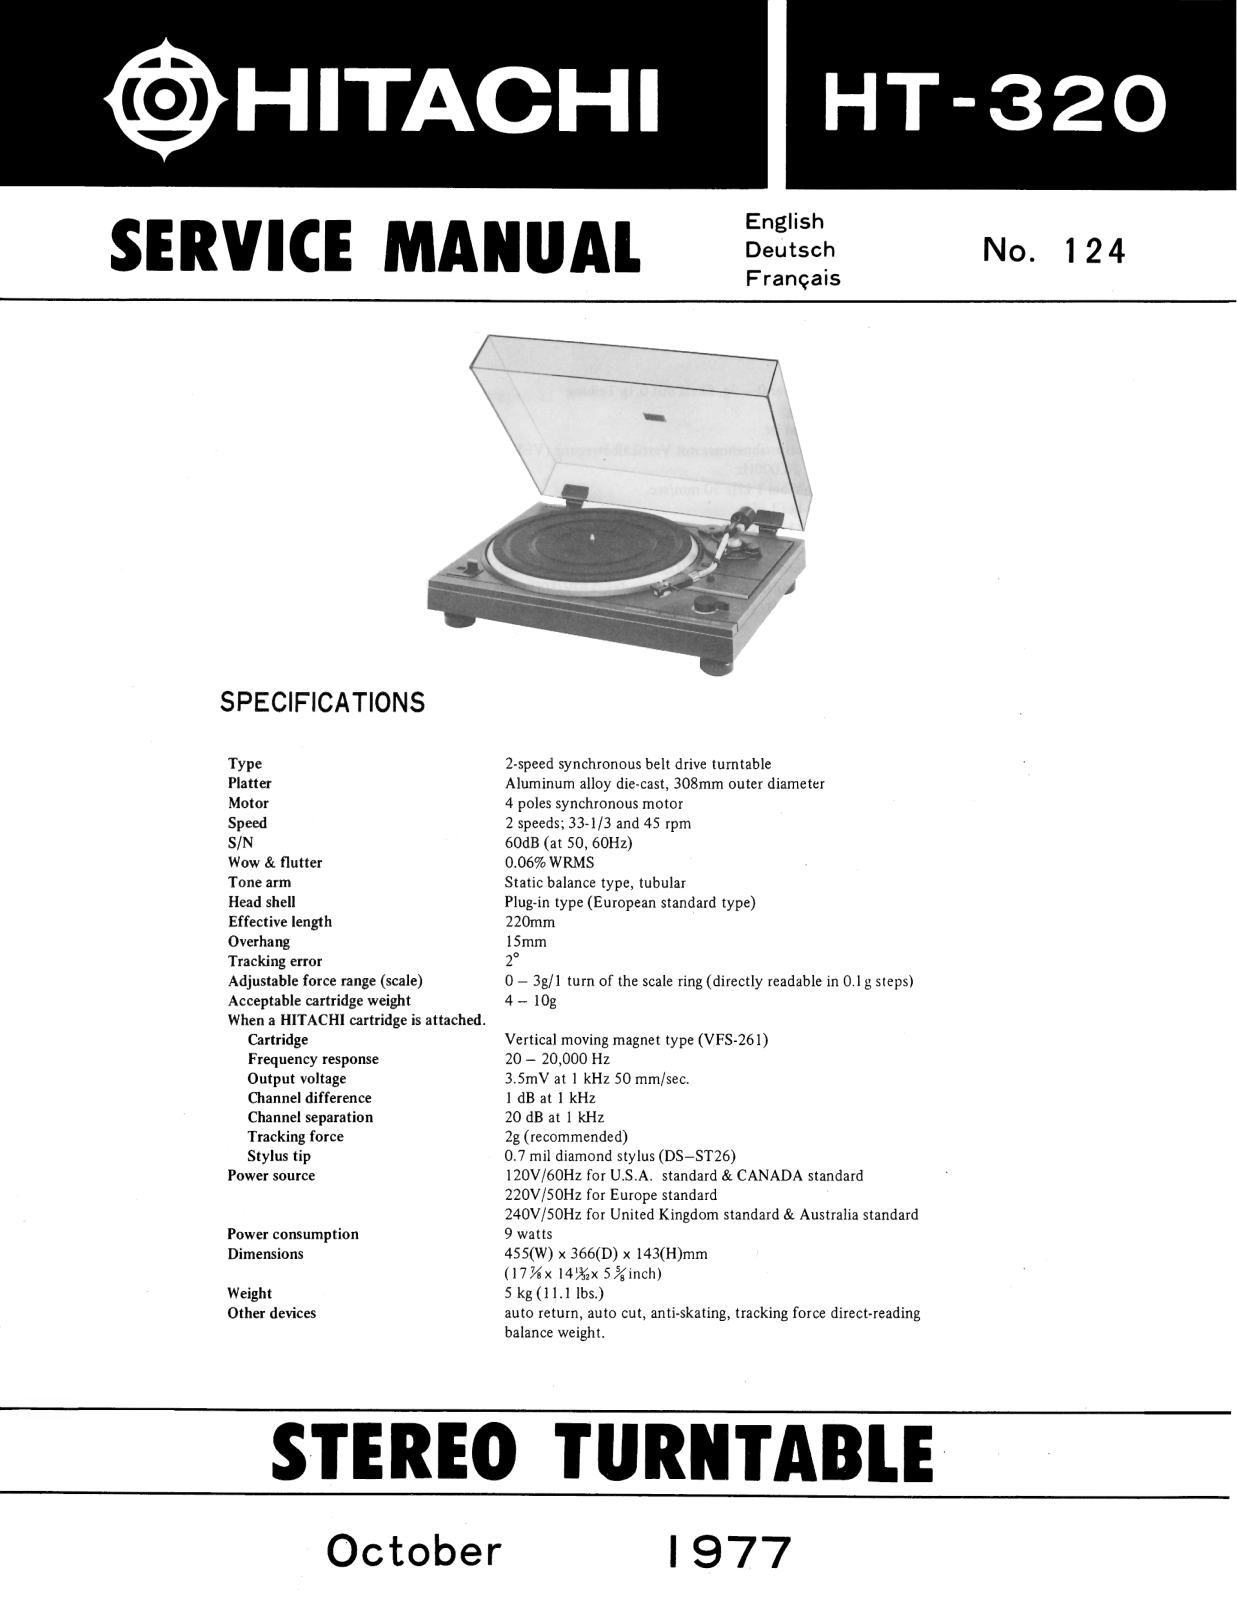 Hitachi HT-320 Service Manual